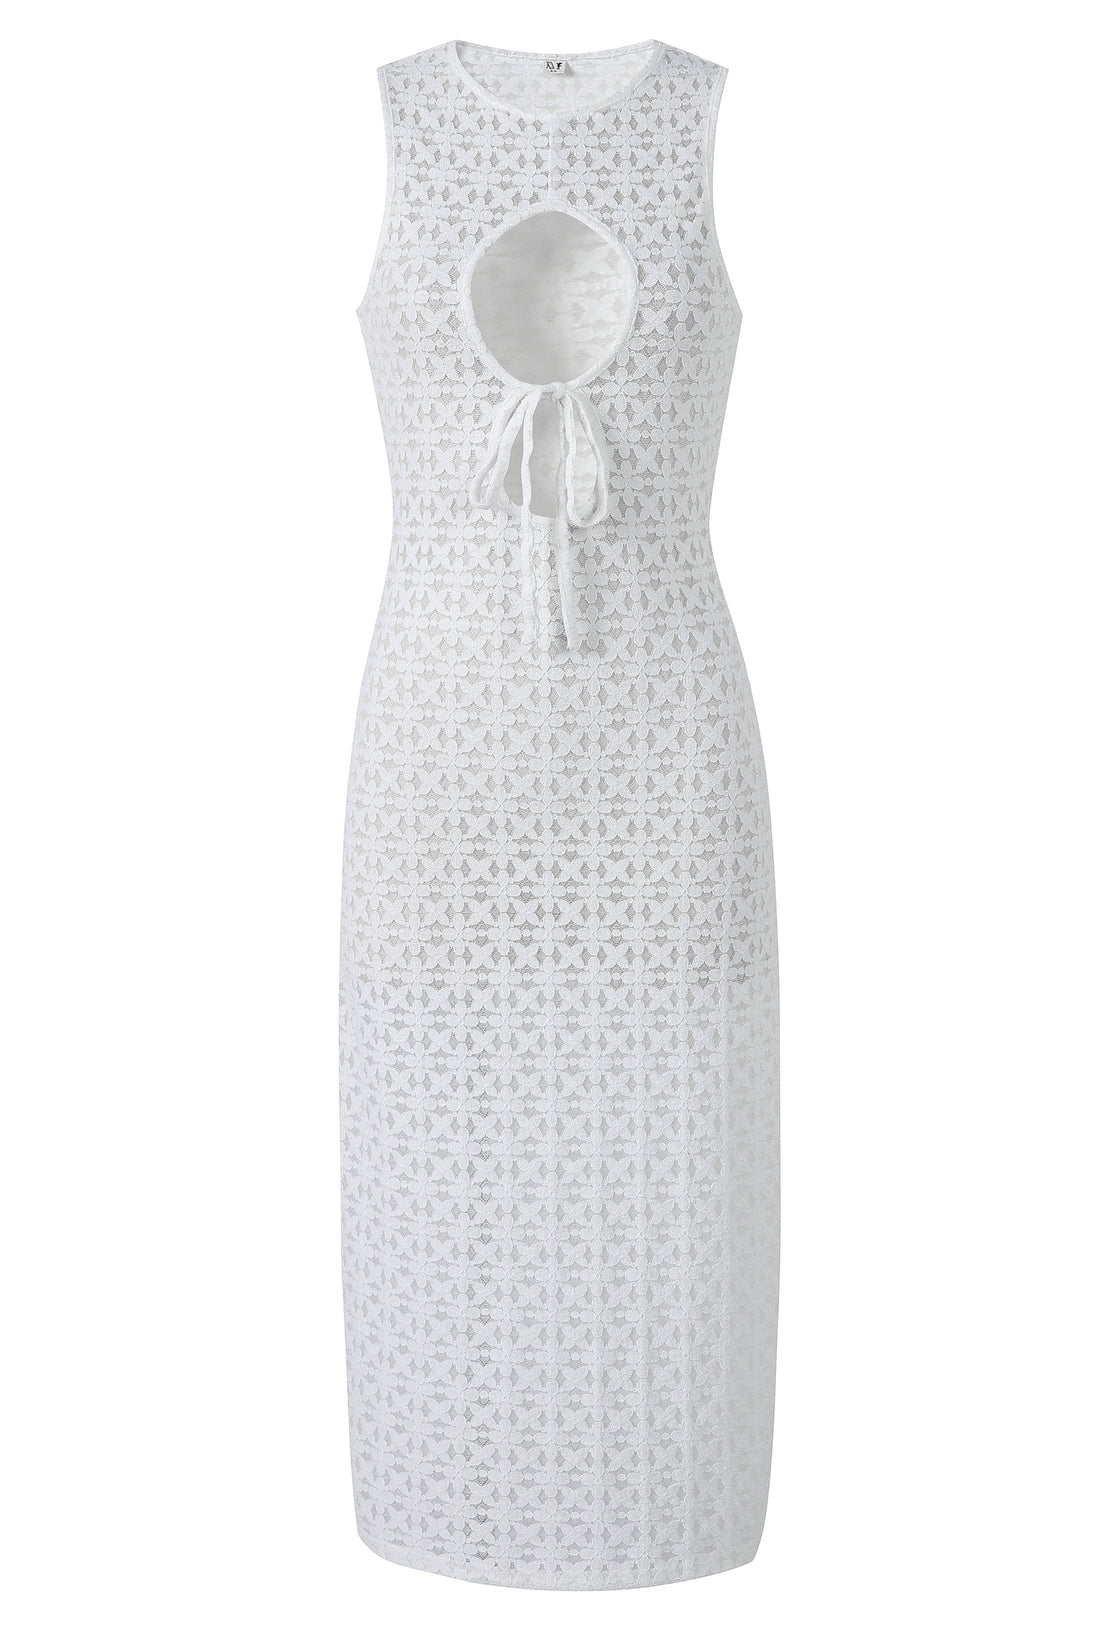 Hole-y White Lace Midi Dress